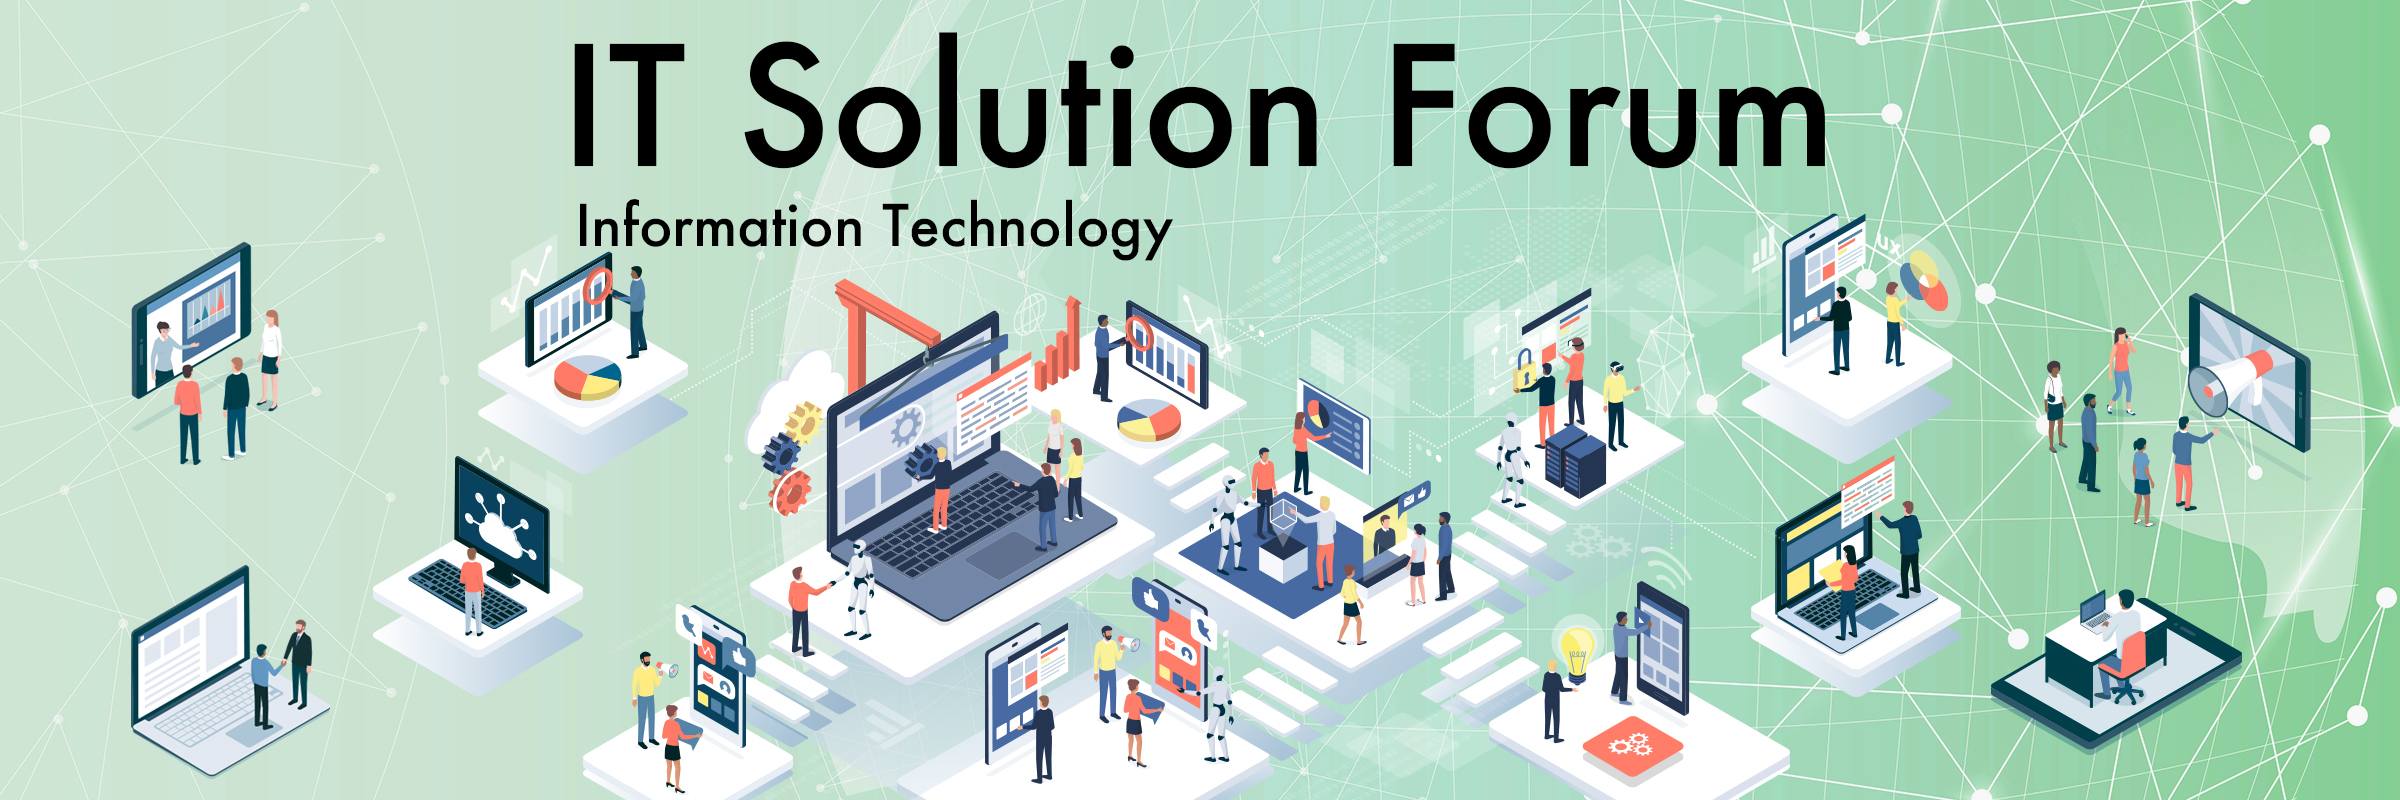 IT Solution Forum